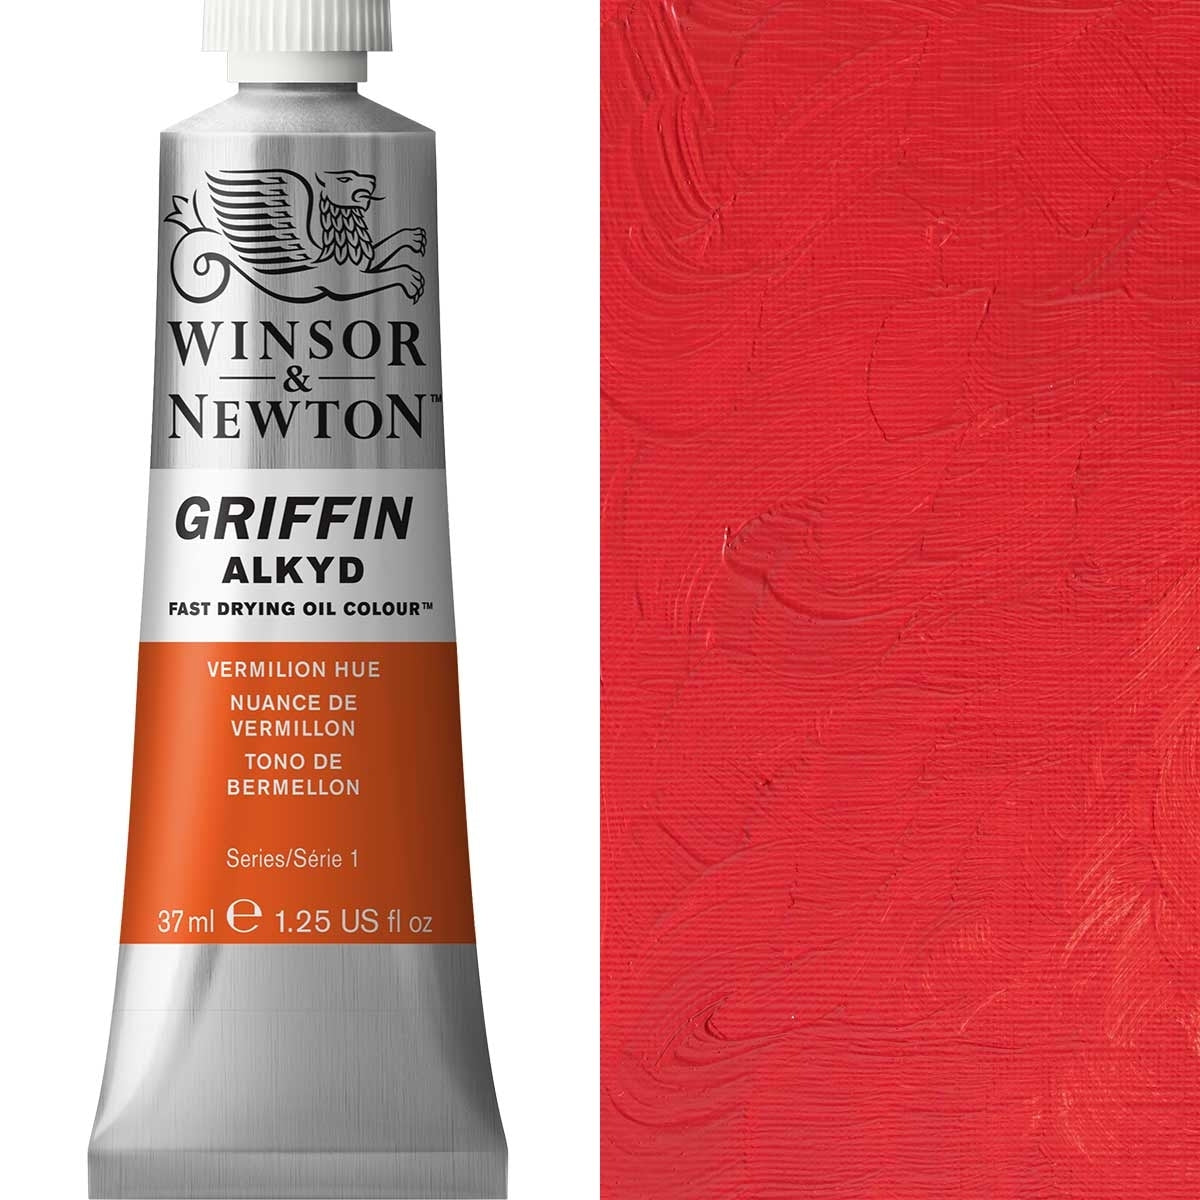 Winsor and Newton - Griffin ALKYD Oil Colour - 37ml - Vermillion